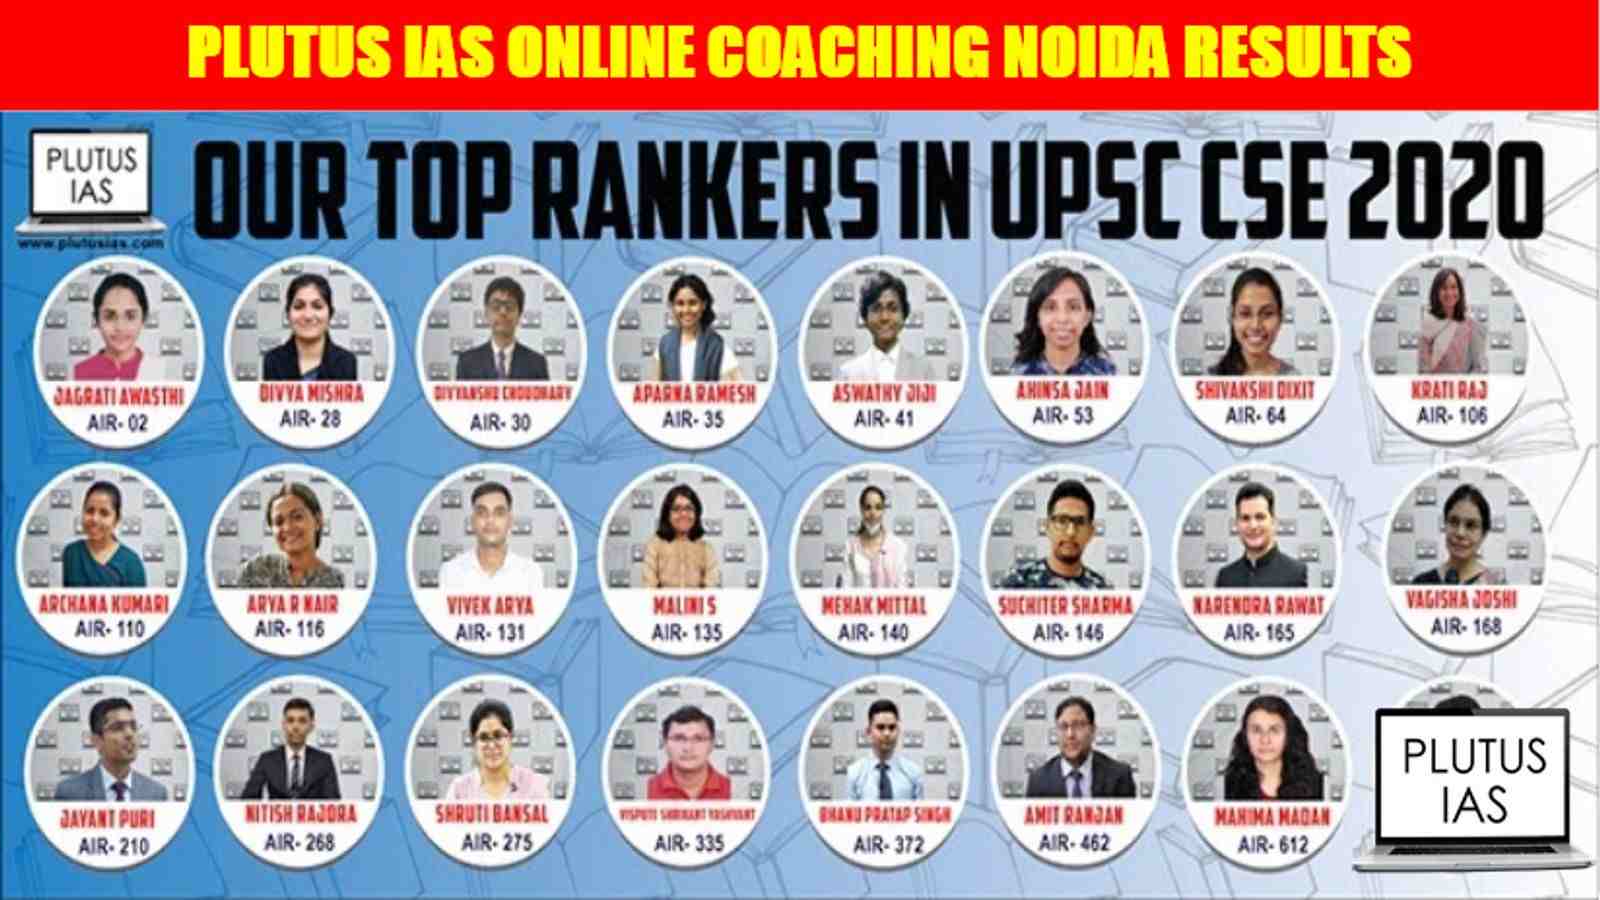 Plutus IAS Online Coaching Noida Results